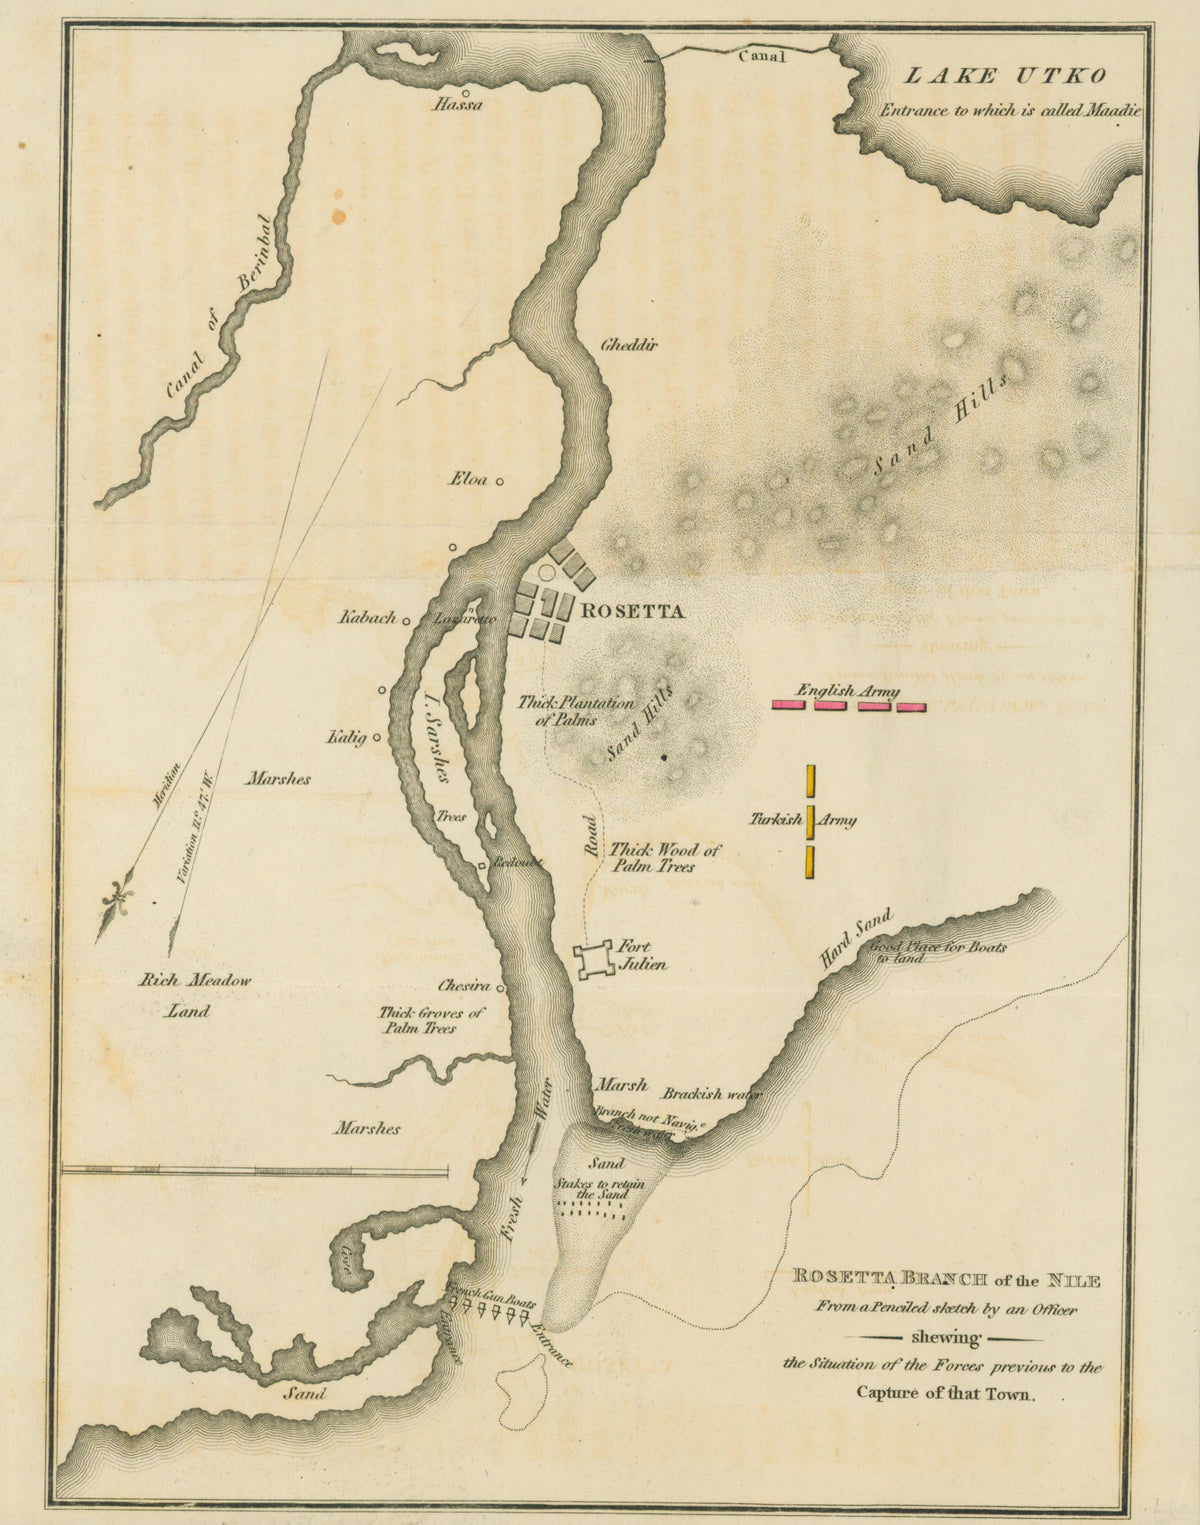 Rosetta Branch of the Nile- Antique Map - Authentic Vintage Antique Print